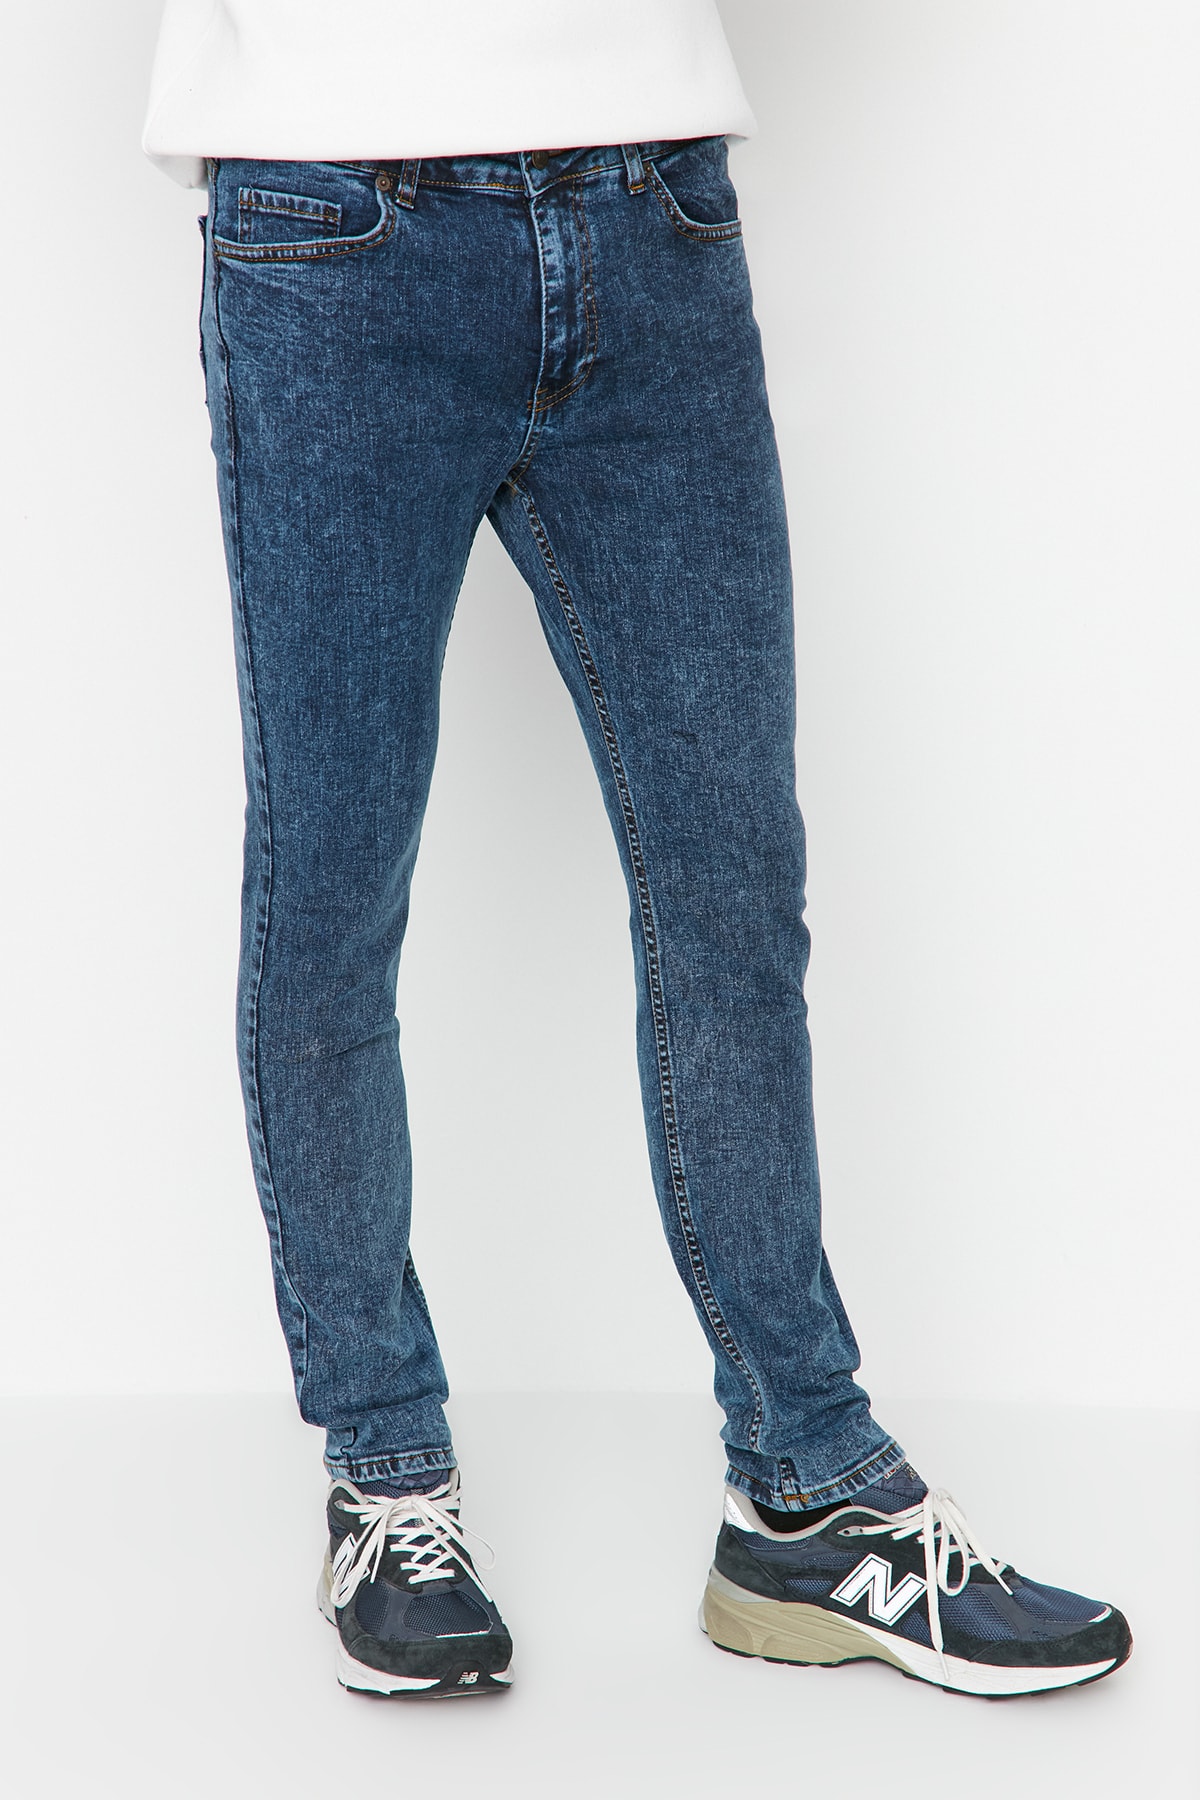 Trendyol Navy Blue Men's Flexible Fabric Skinny Fit Jeans Denim Trousers